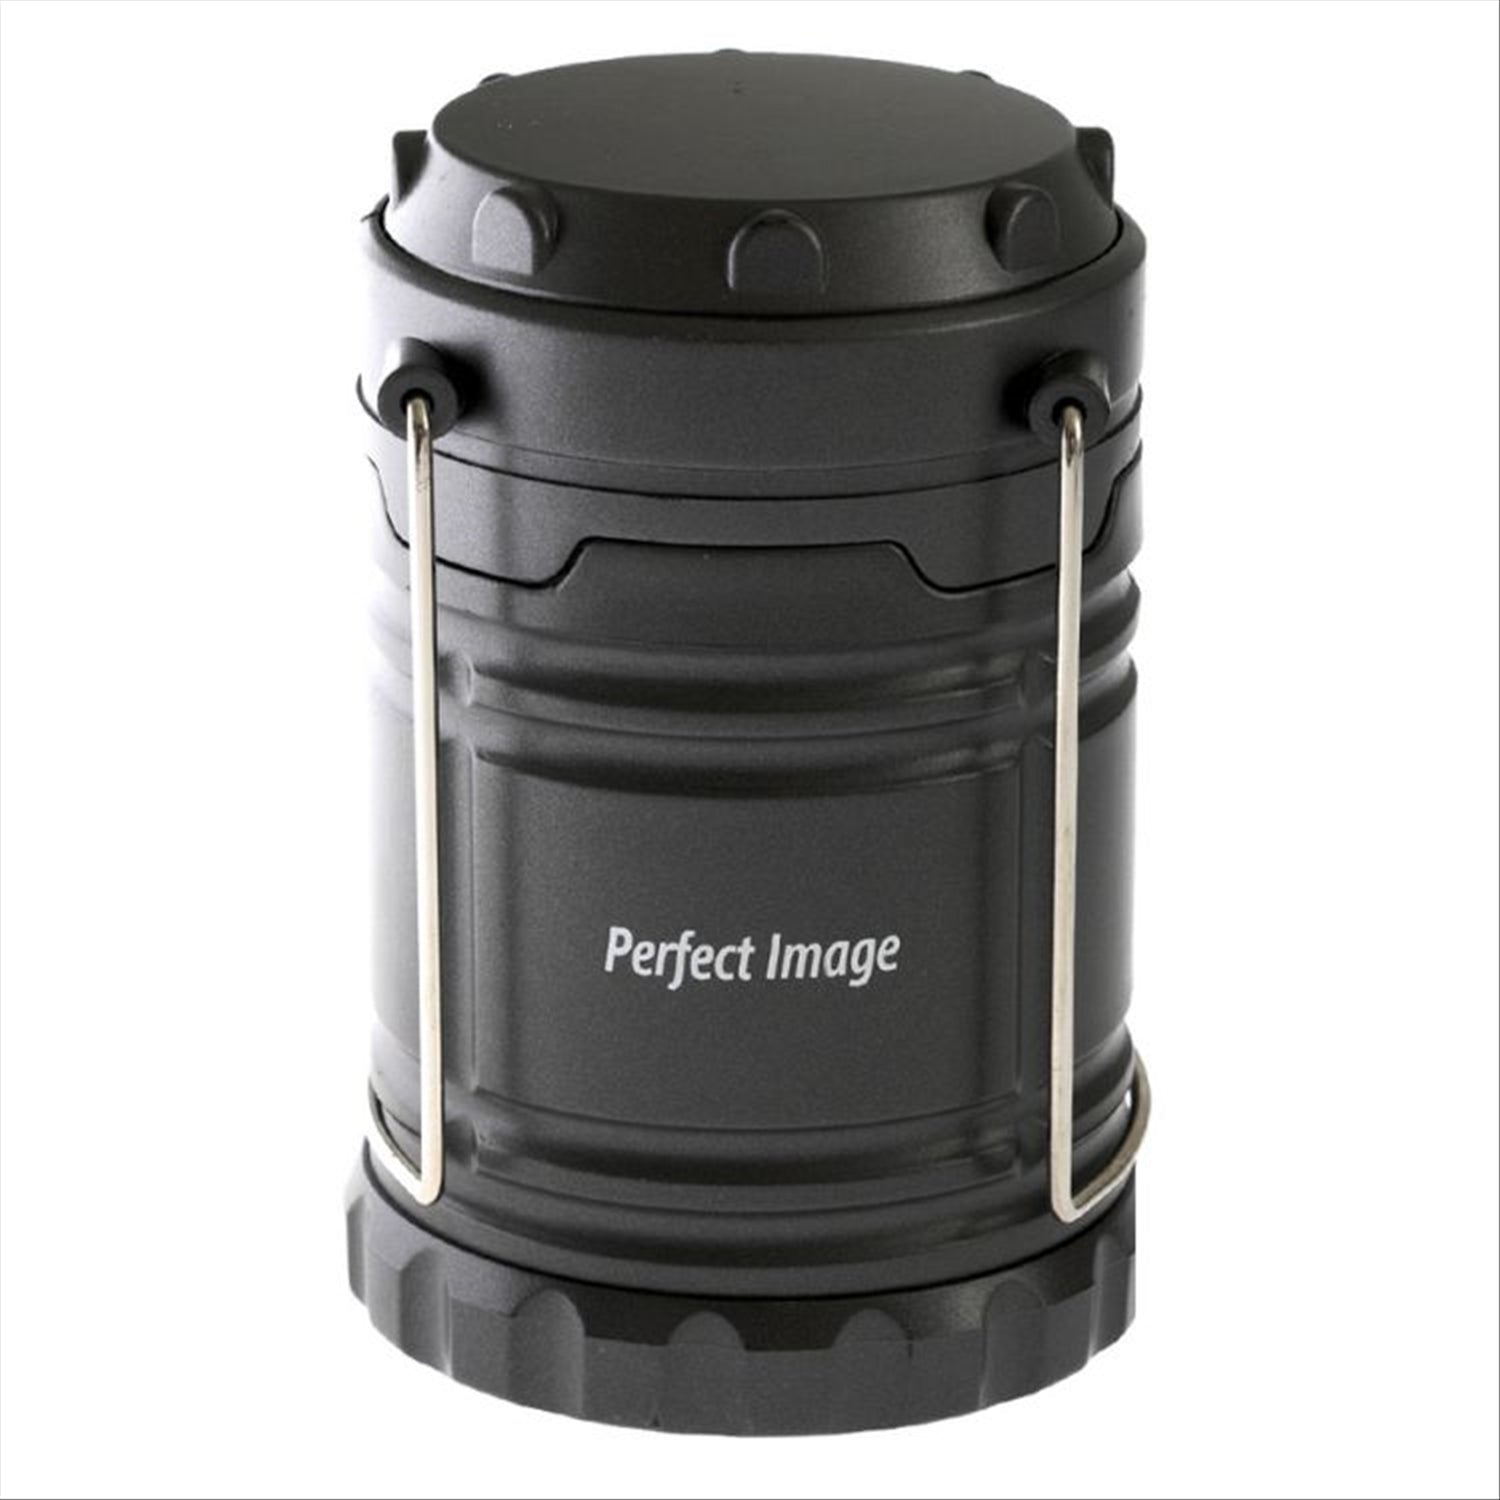 PERFECT IMAGE Perfect Image Cob Mini Lantern Mini - Batteries Included